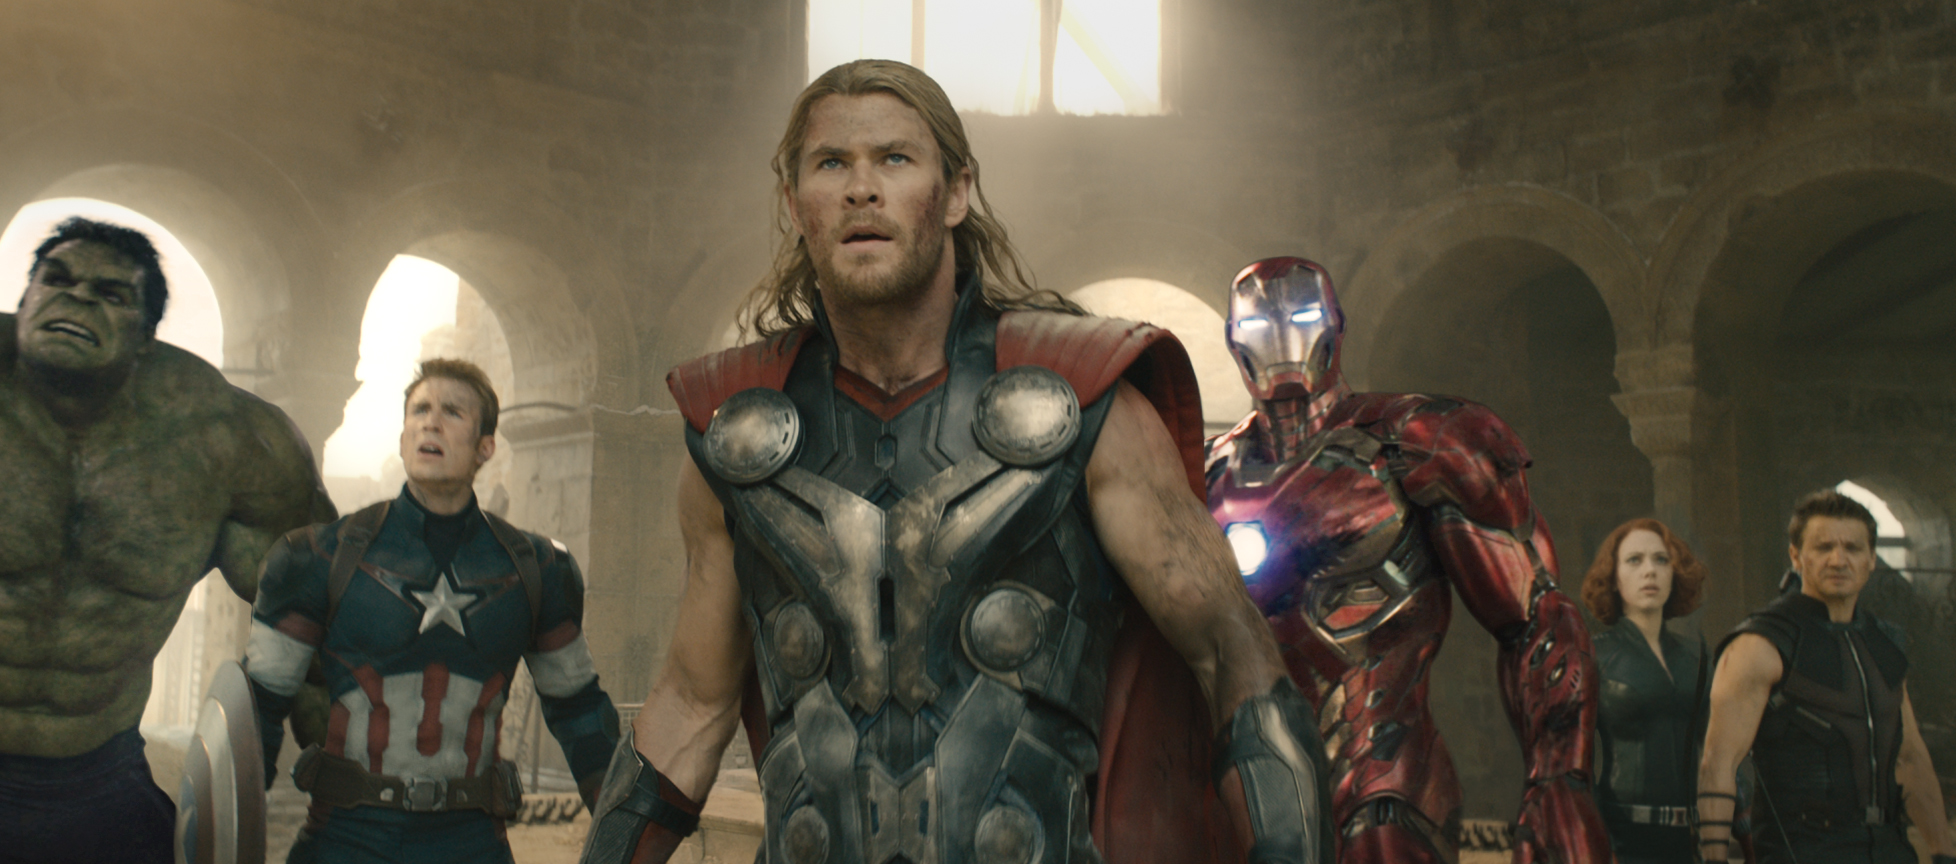 Marvel's Avengers: Age Of Ultron (L to R) Hulk (Mark Ruffalo), Captain America (Chris Evans), Thor (Chris Hemsworth), Iron Man (Robert Downey Jr.), Black Widow (Scarlett Johansson) and Hawkeye (Jeremy Renner). (Photo: Marvel)